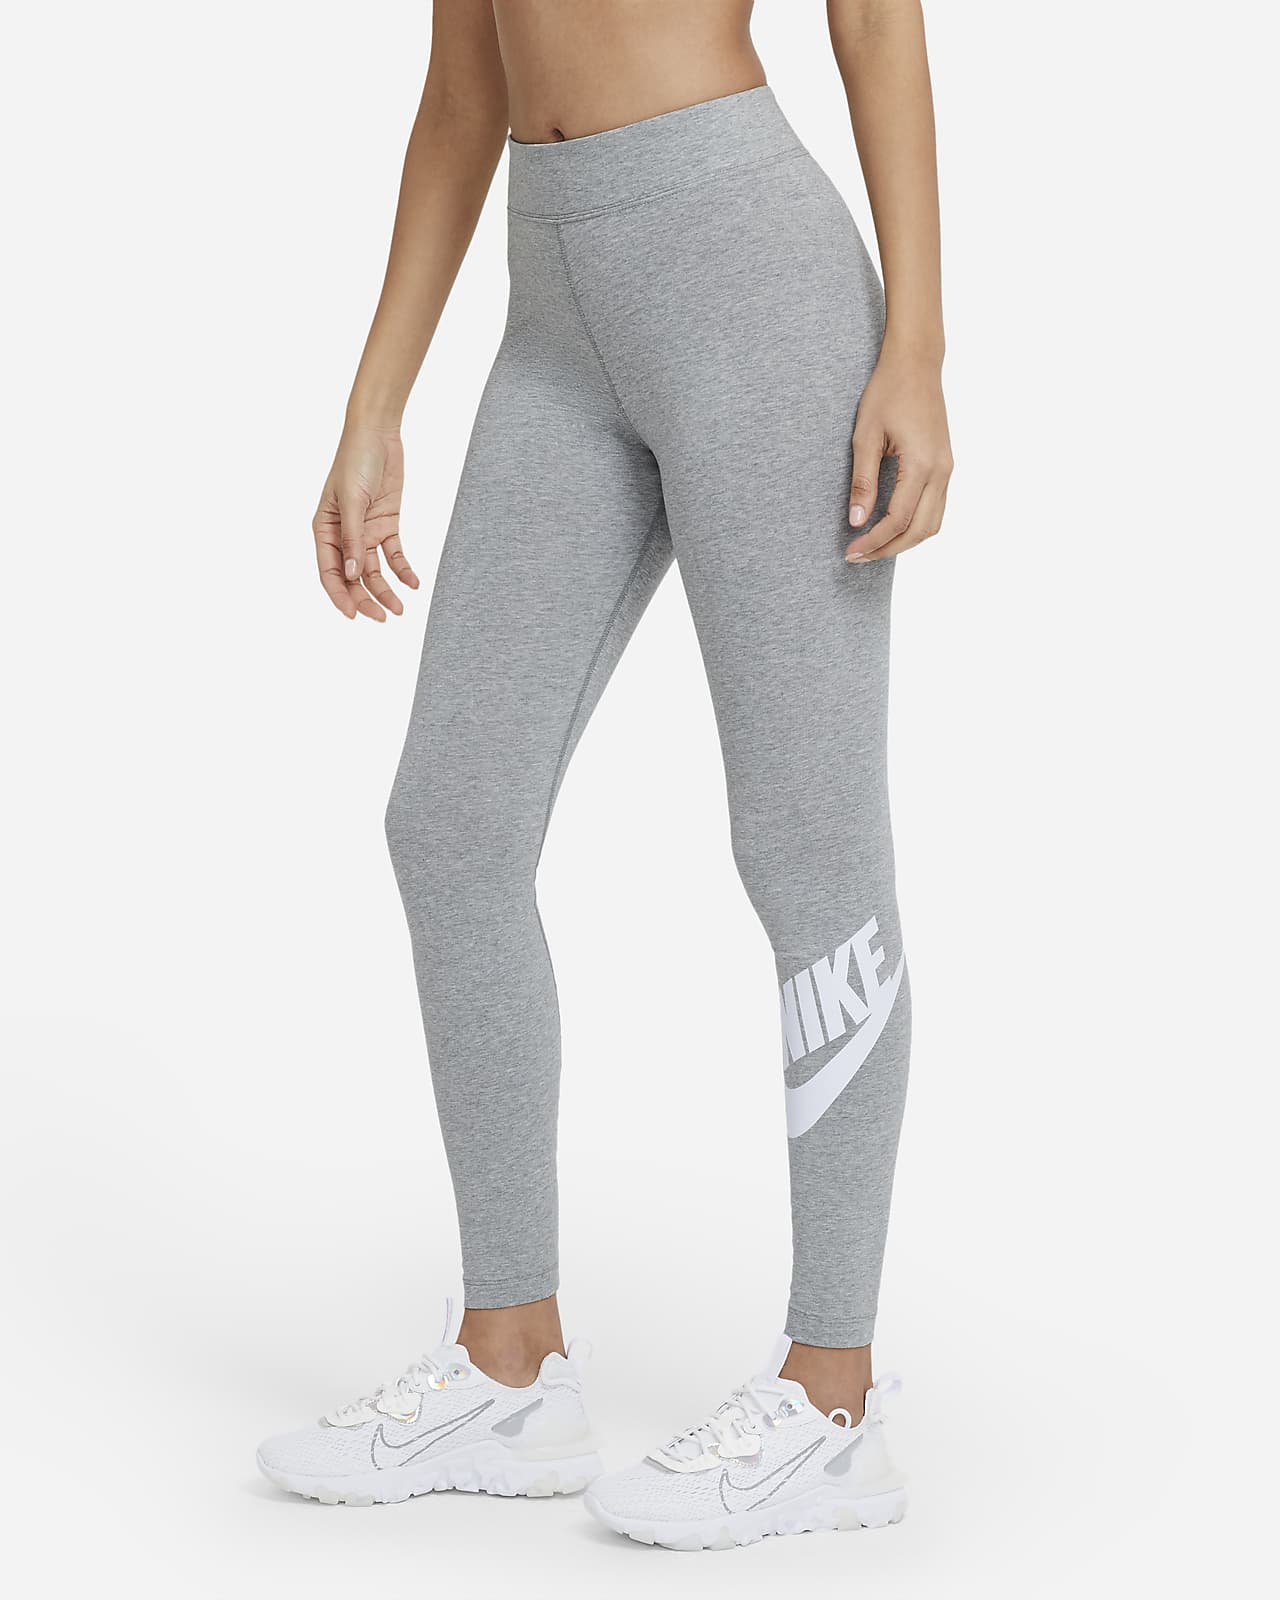 Pantalon Nike Yoga Mujer Gris